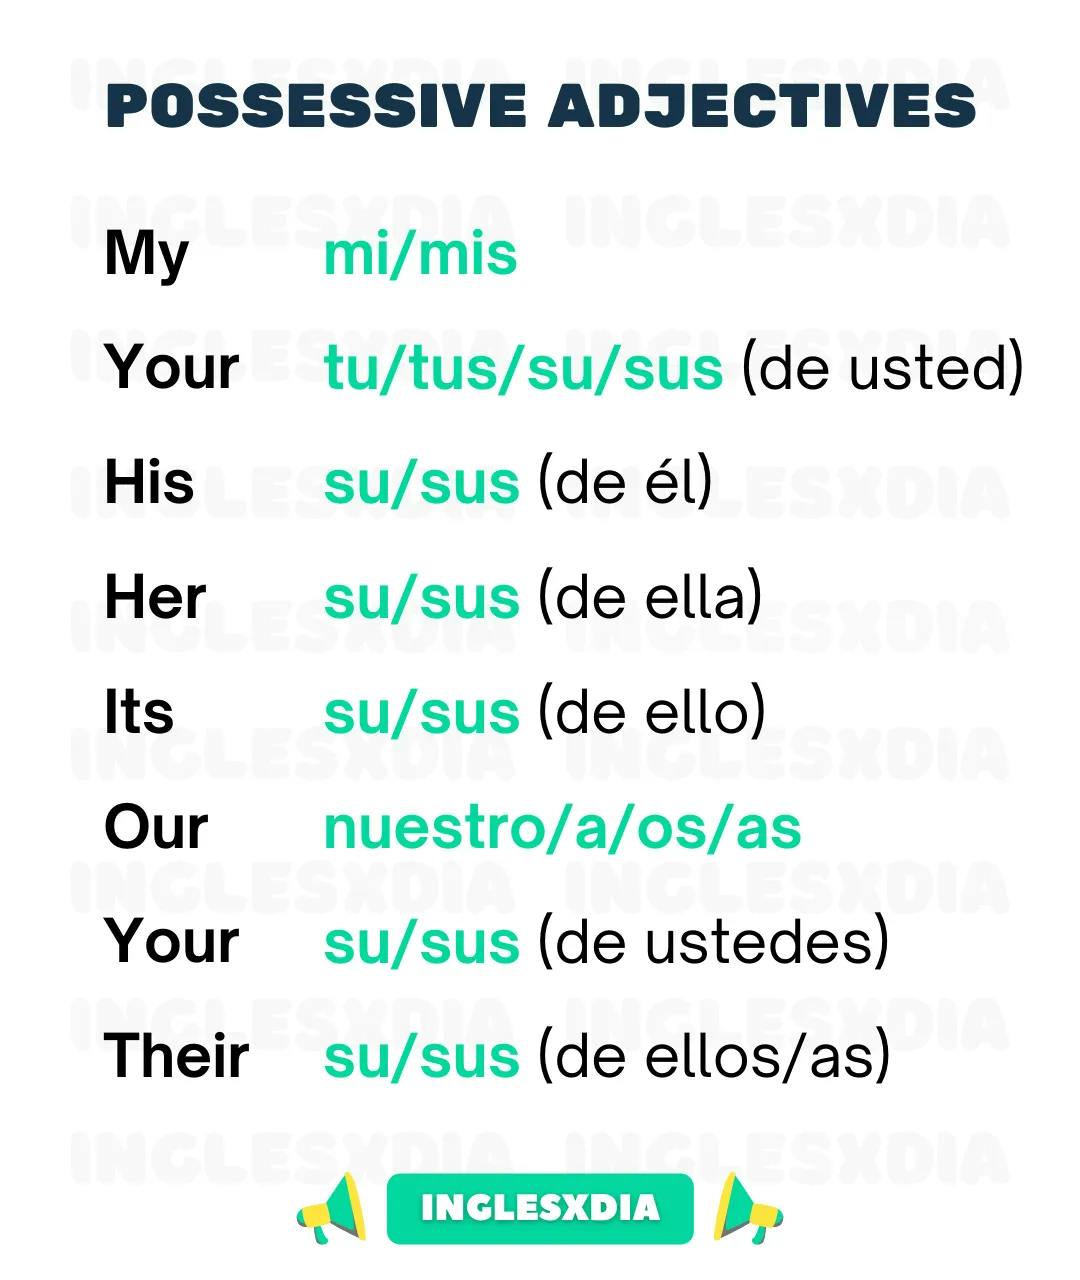 Curso de inglés en línea: adjetivos posesivos en inglés